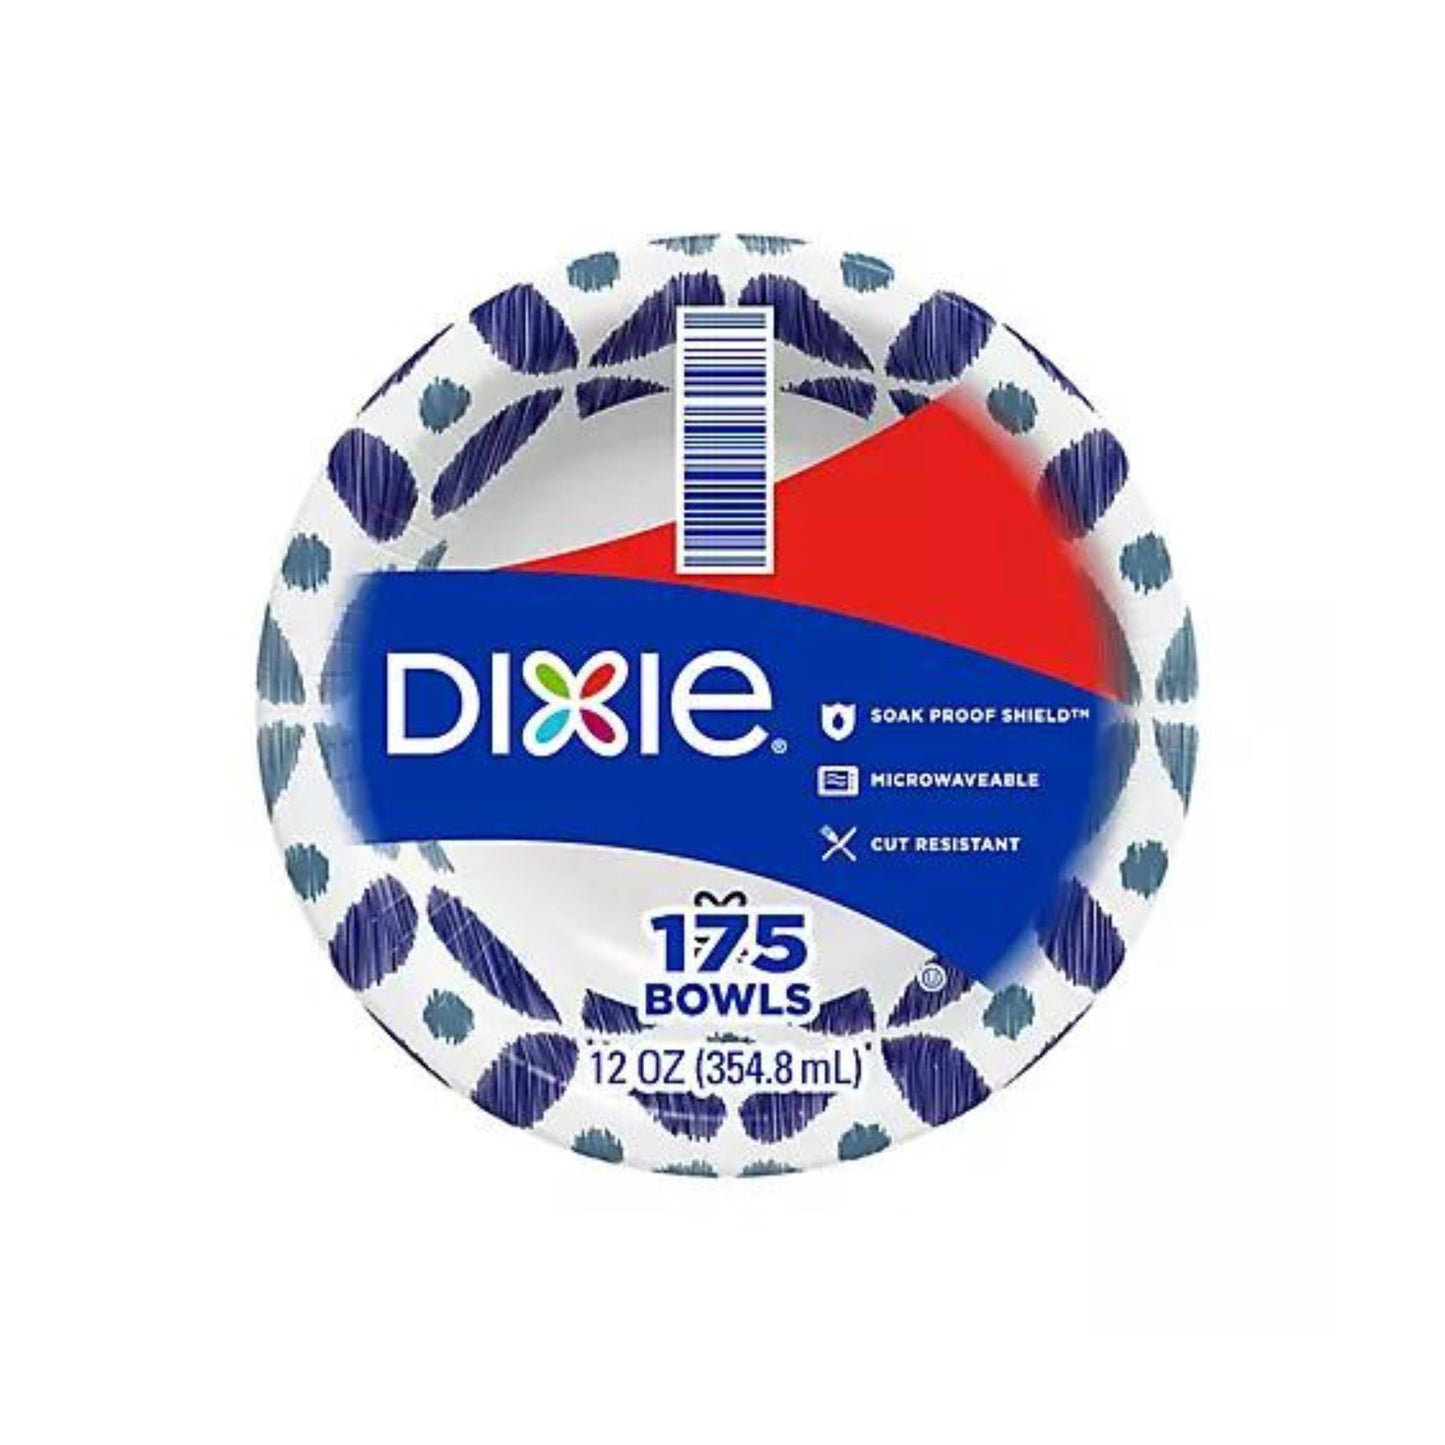 Dixie 12 oz. Printed Paper Bowl 175 count